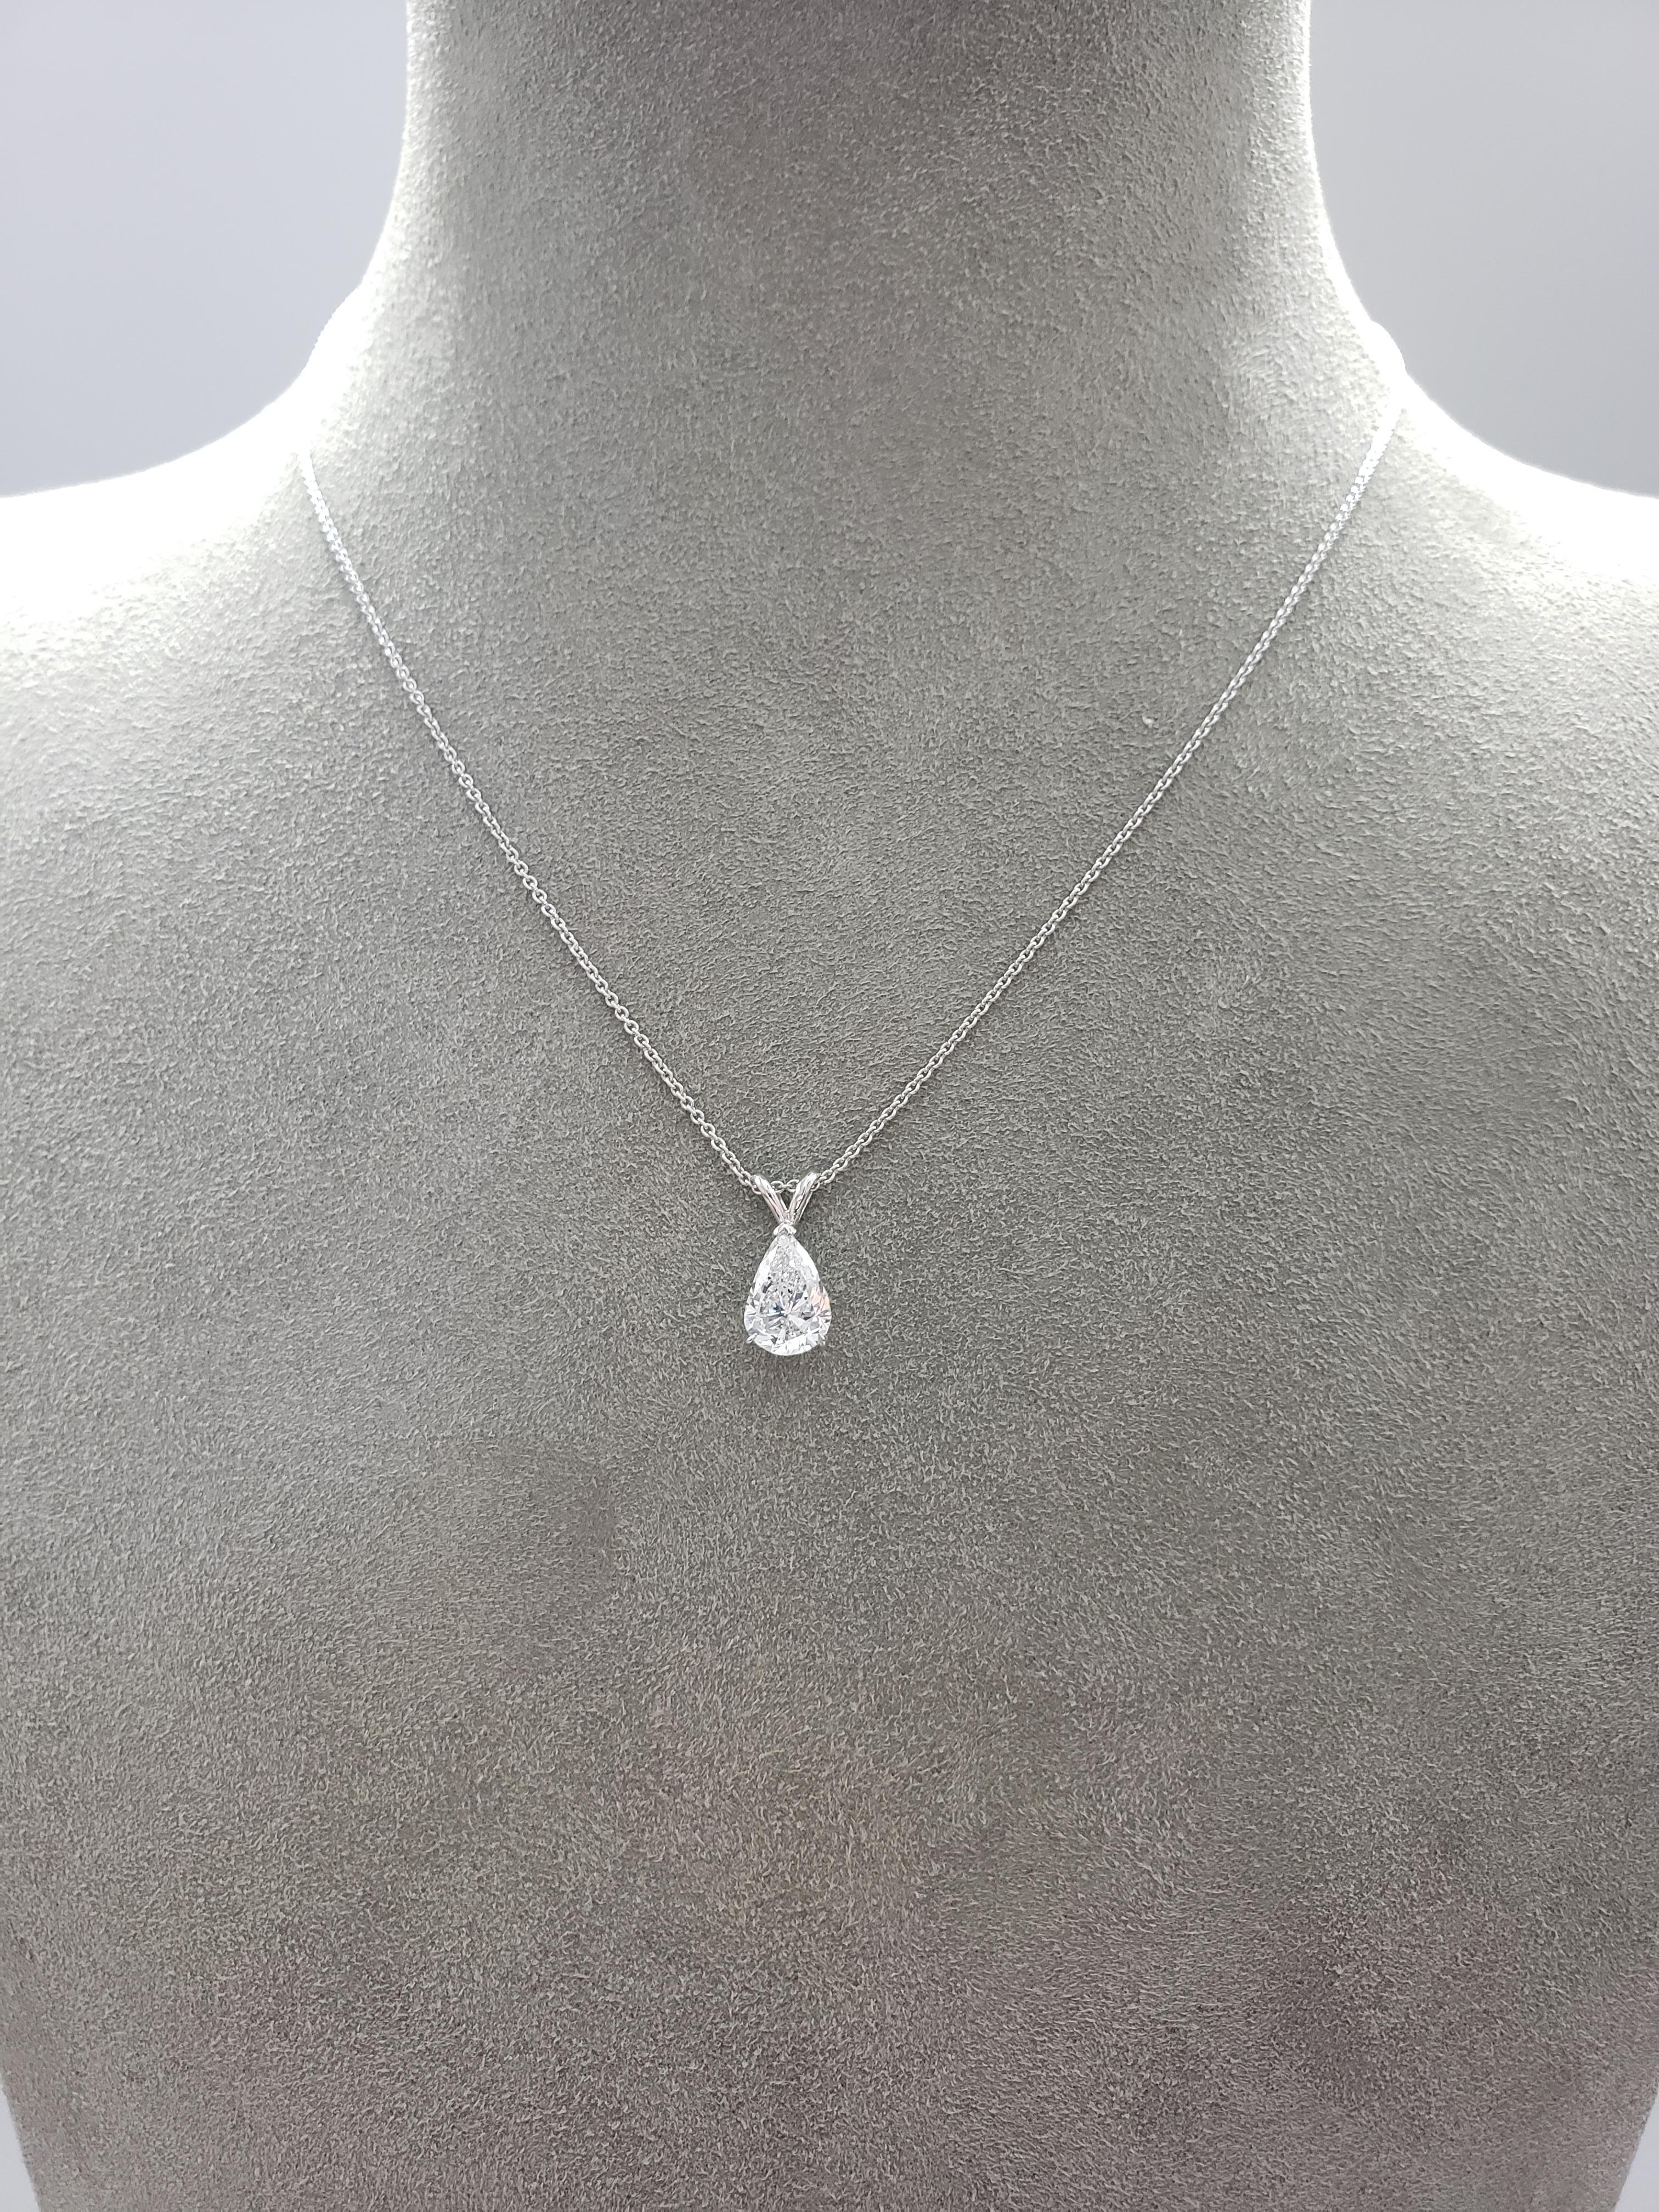 Pear Cut 1.64 Carat Pear Shape Diamond Solitaire Pendant Necklace